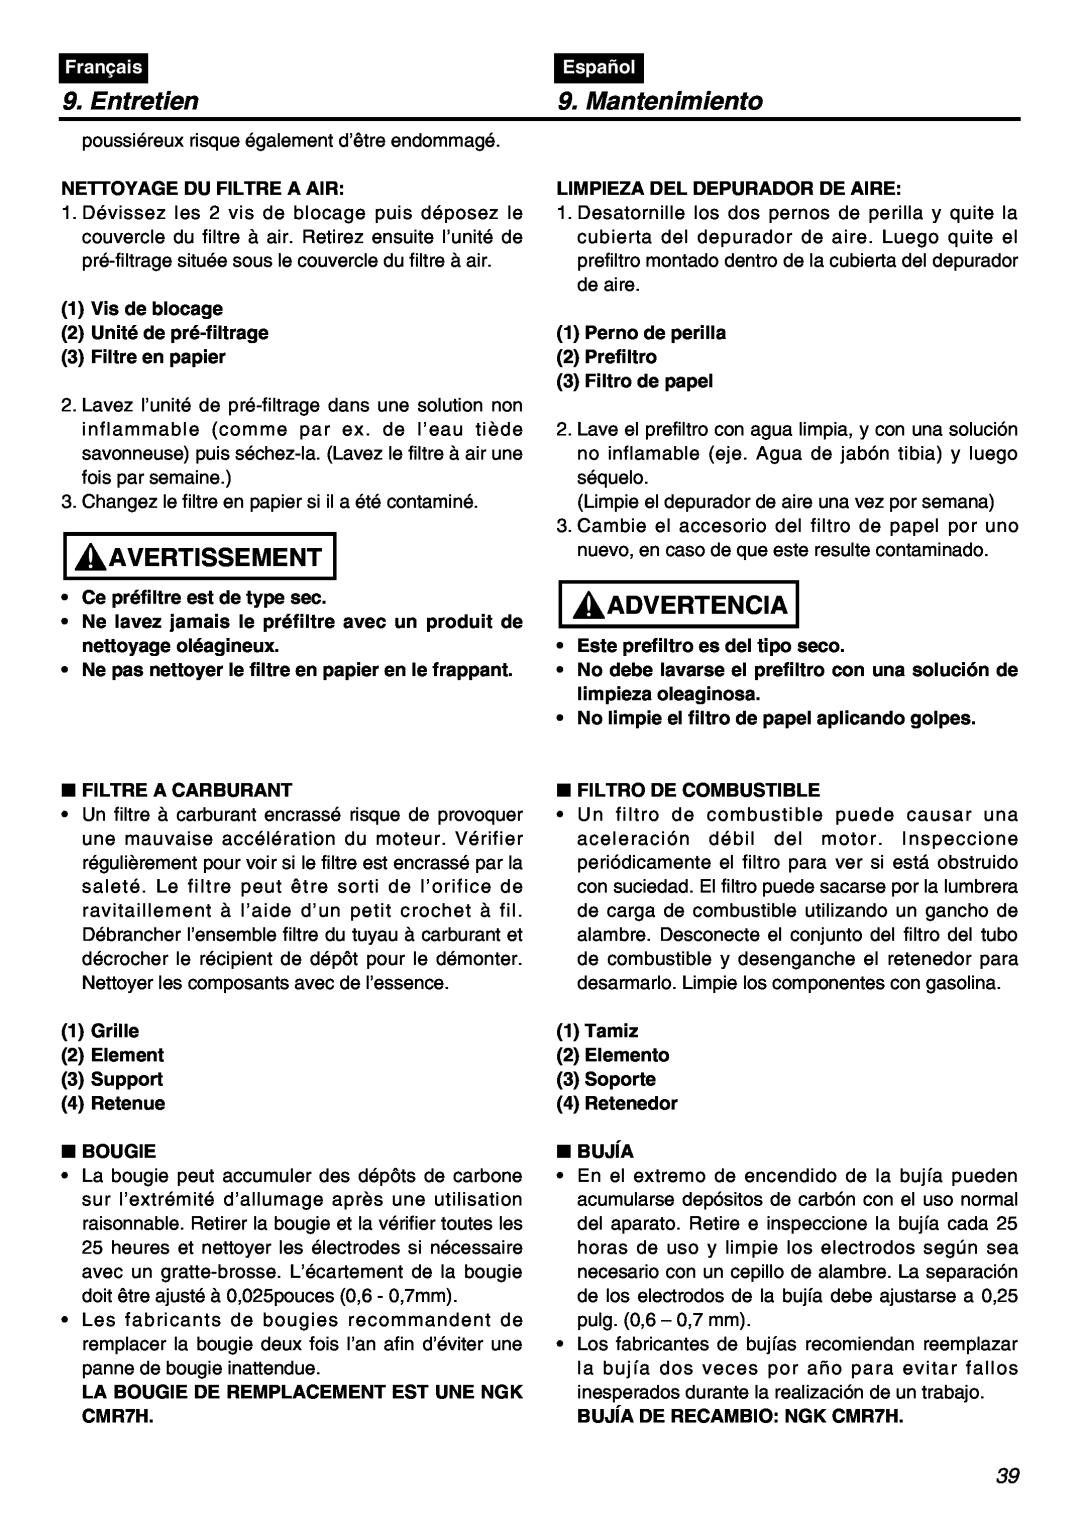 RedMax EBZ7100RH-CA, EBZ7100-CA manual Entretien, Mantenimiento, Avertissement, Advertencia, Français, Español 